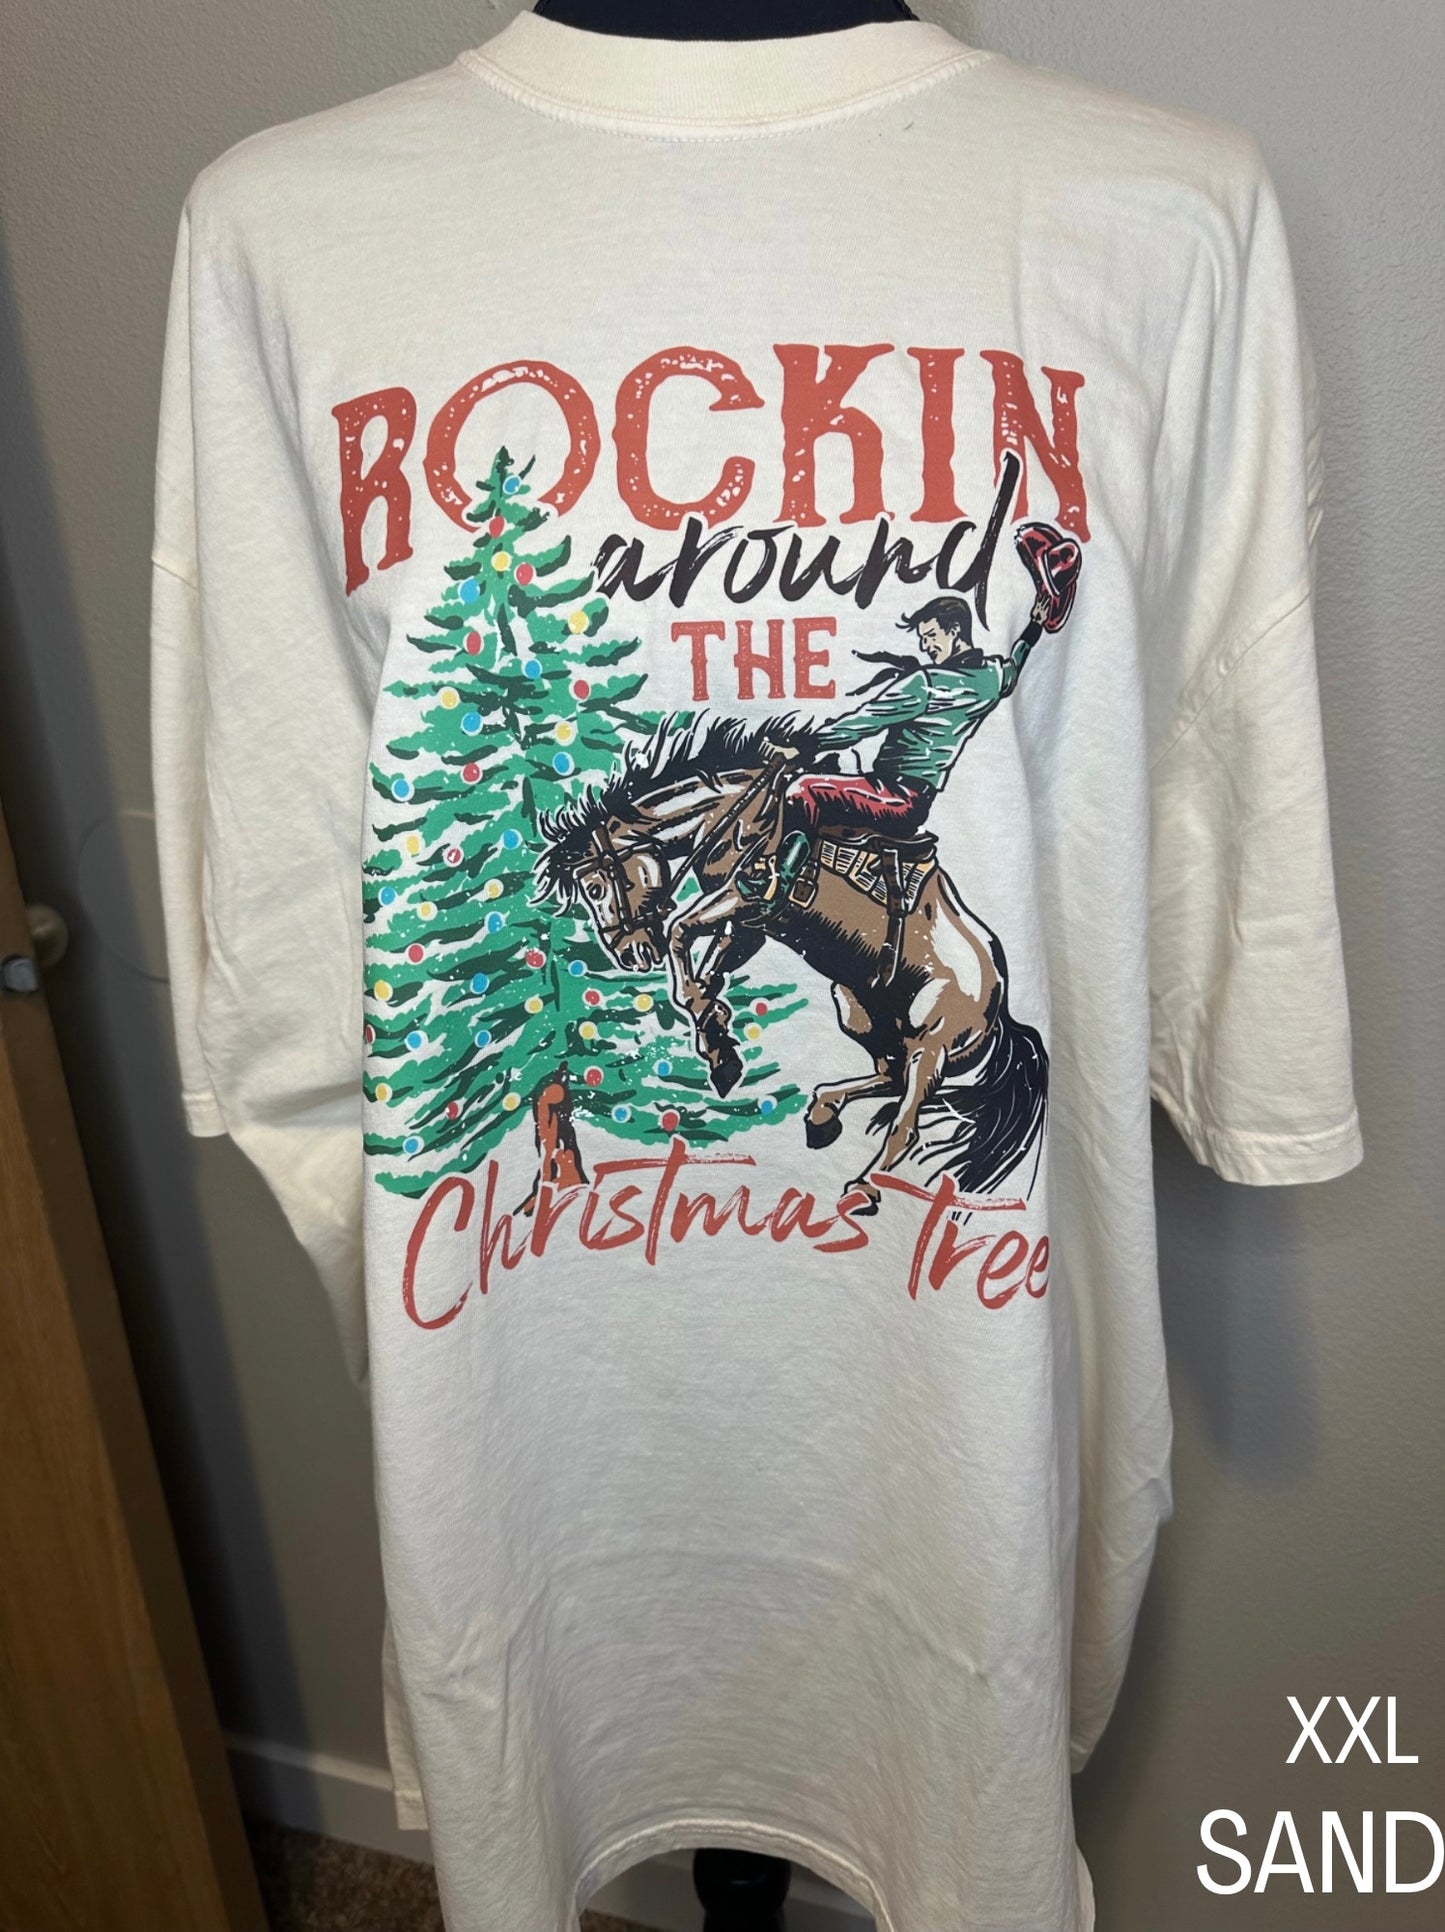 Rockin’ Around the Christmas Tree Tee (XXL in Sand)